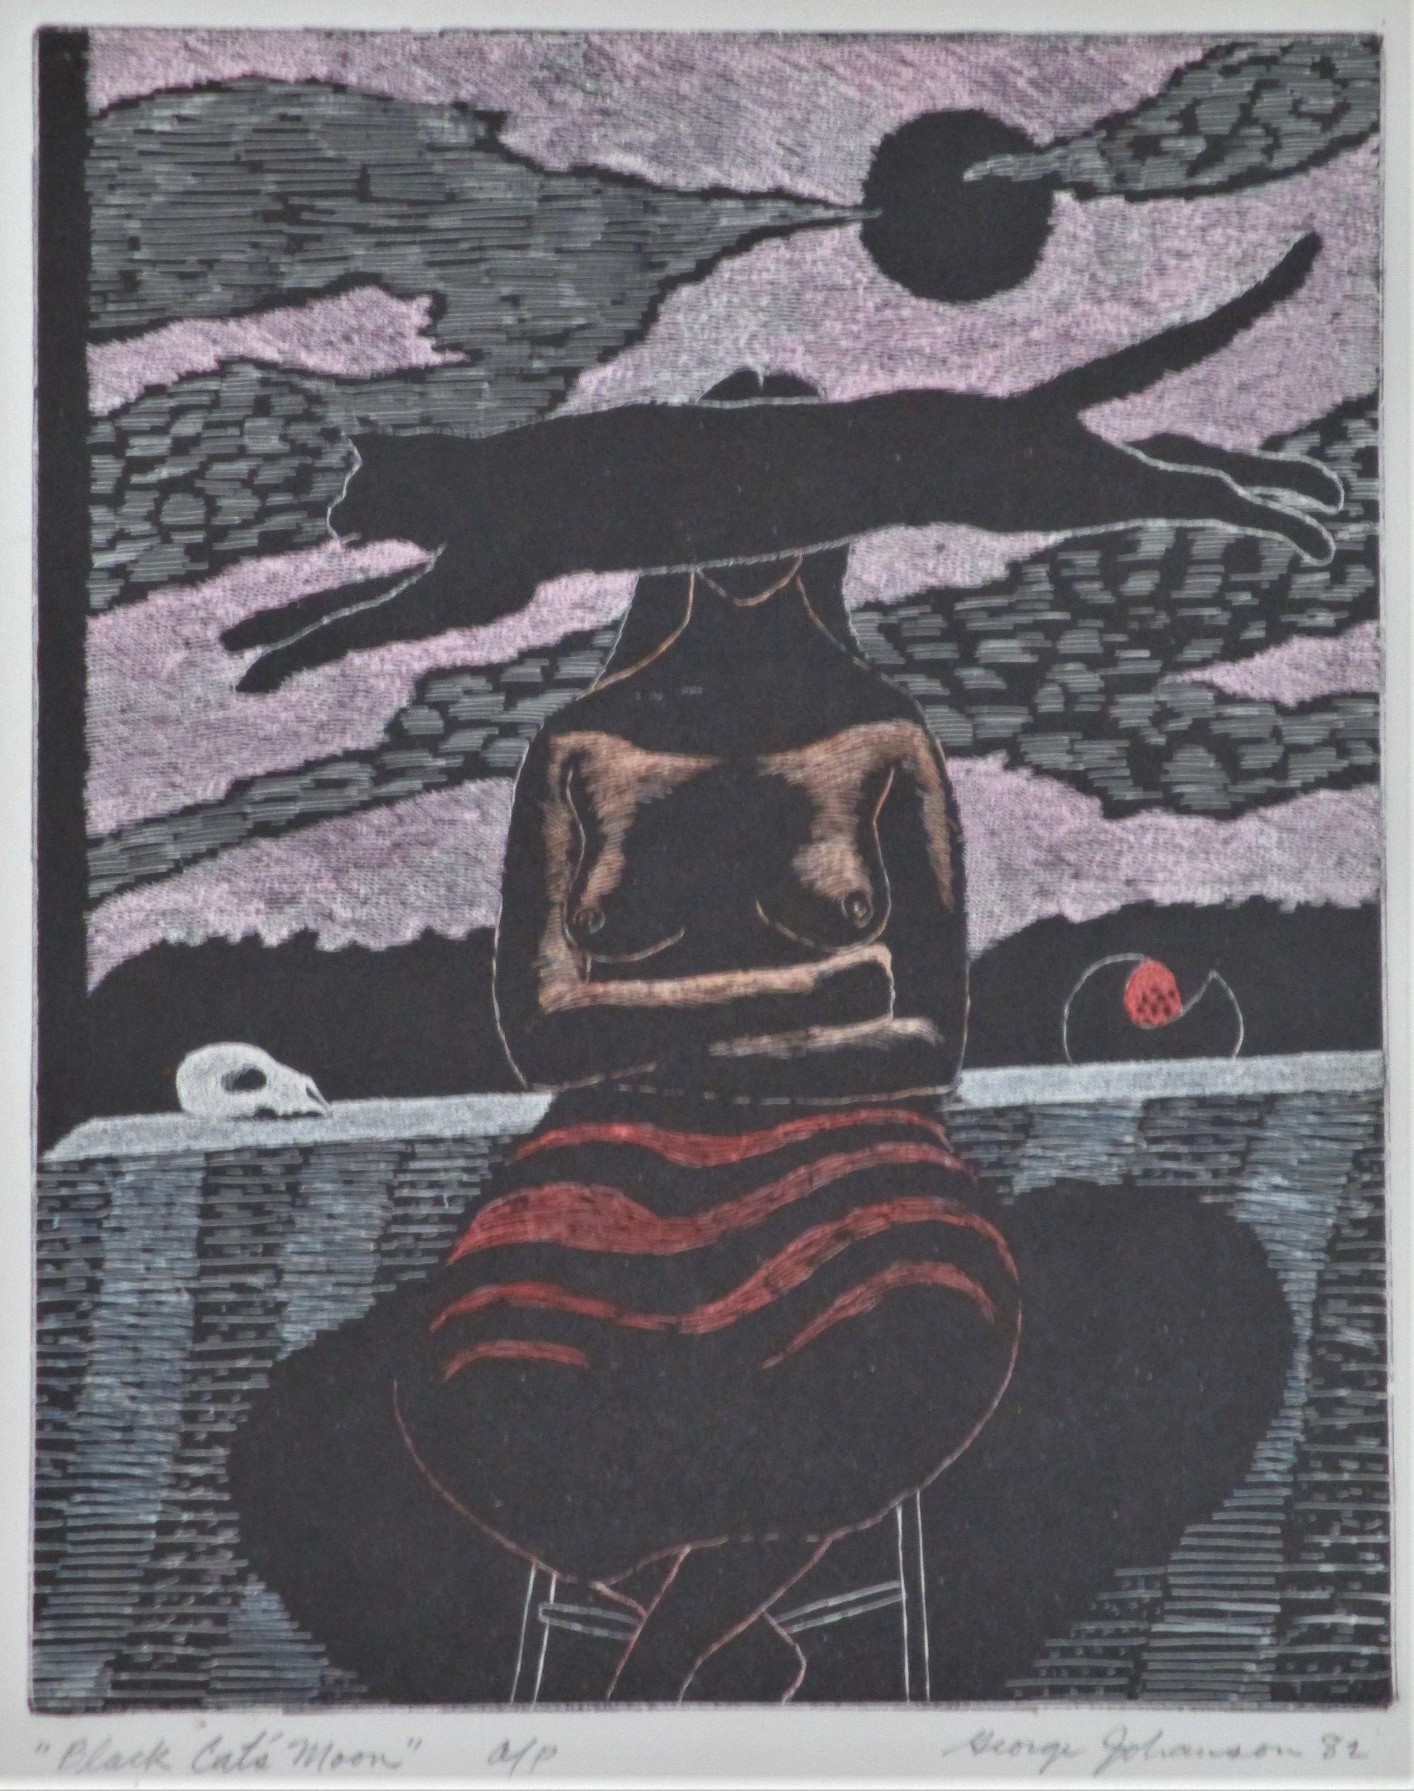 Black Cat's Moon by  George Johanson - Masterpiece Online